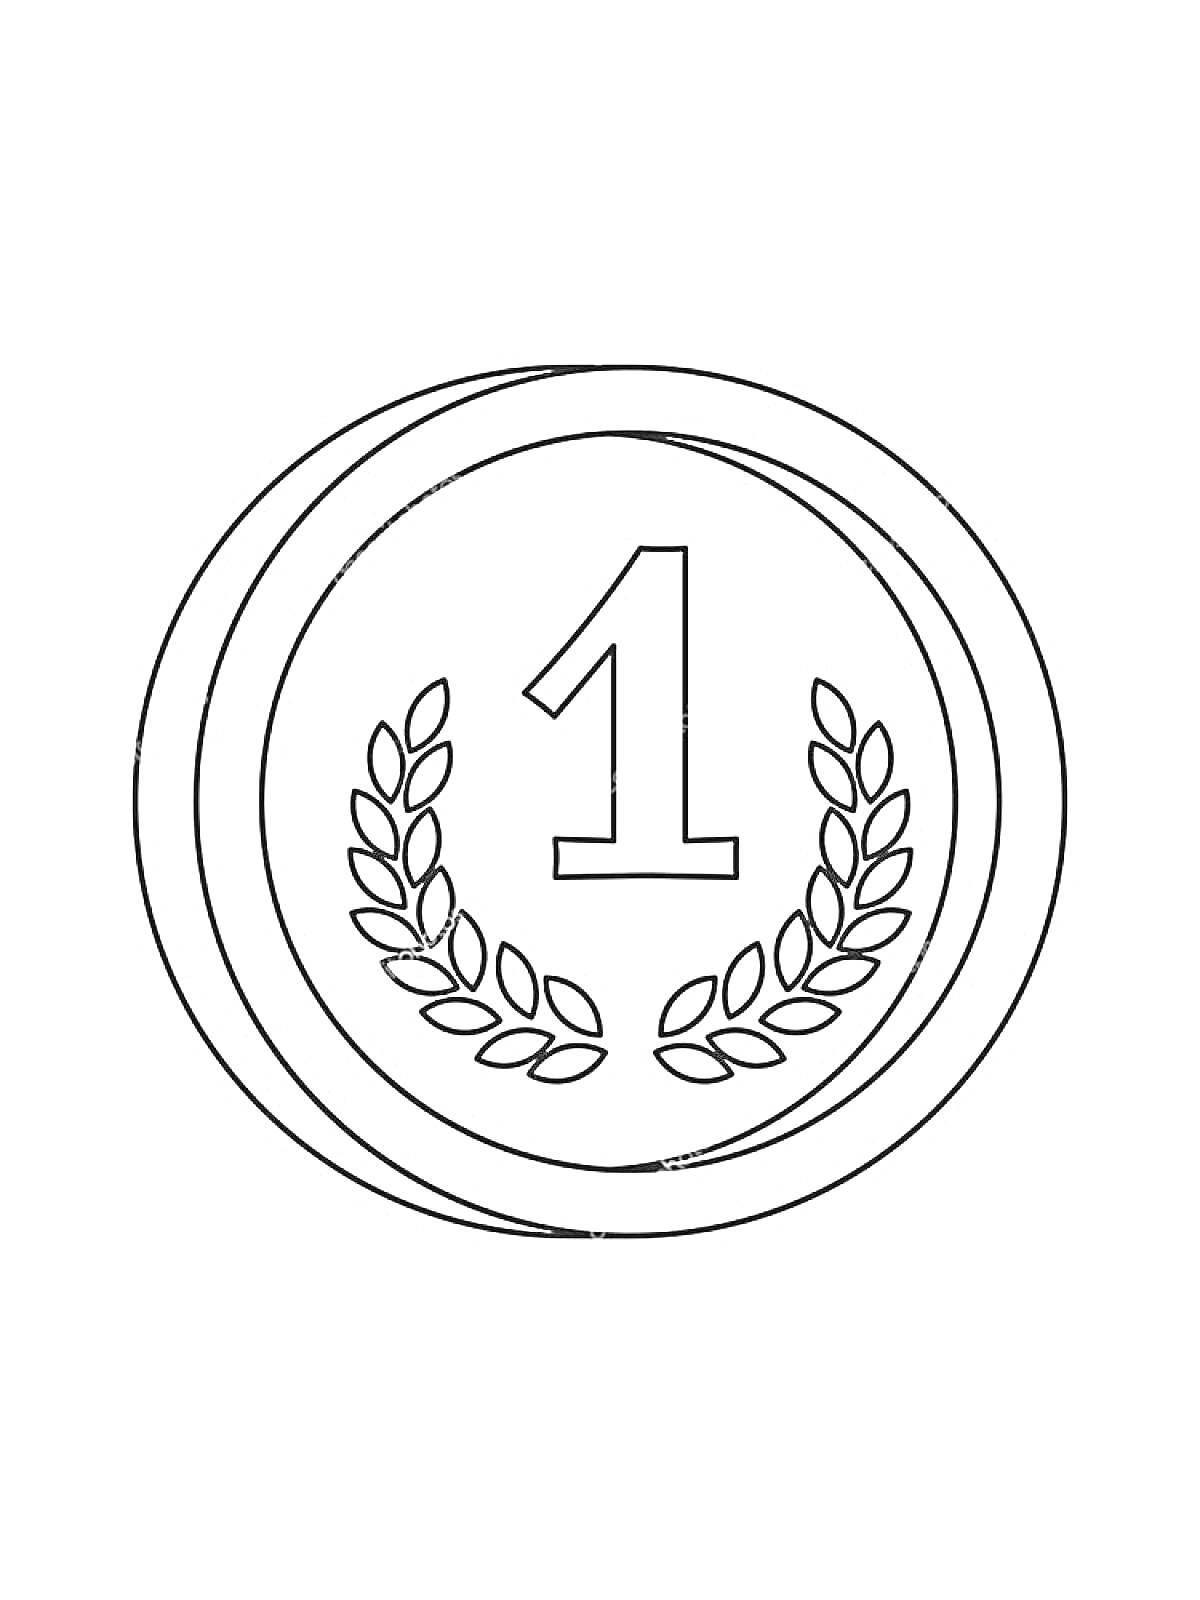 Раскраска Монета с цифрой 1 и лавровыми ветвями